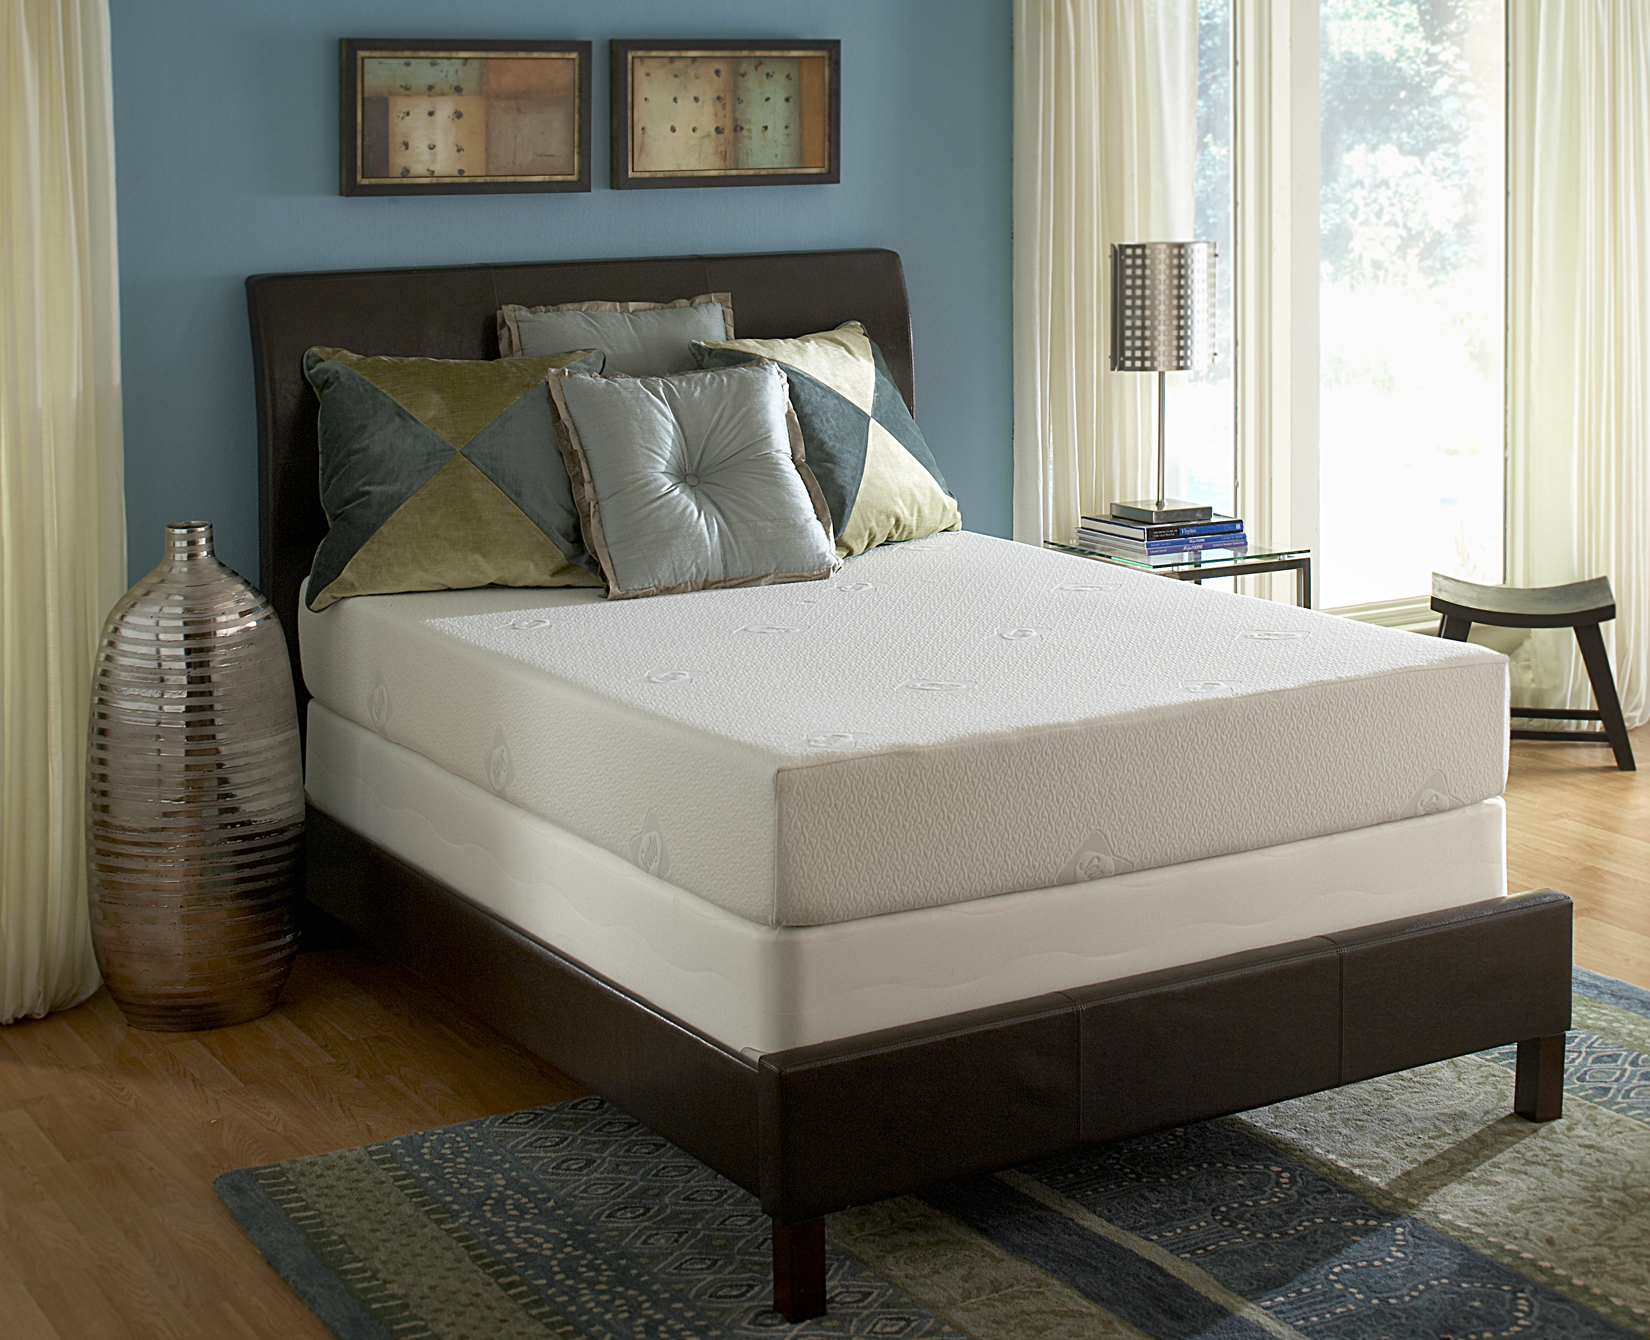 sealy westwood series mattress